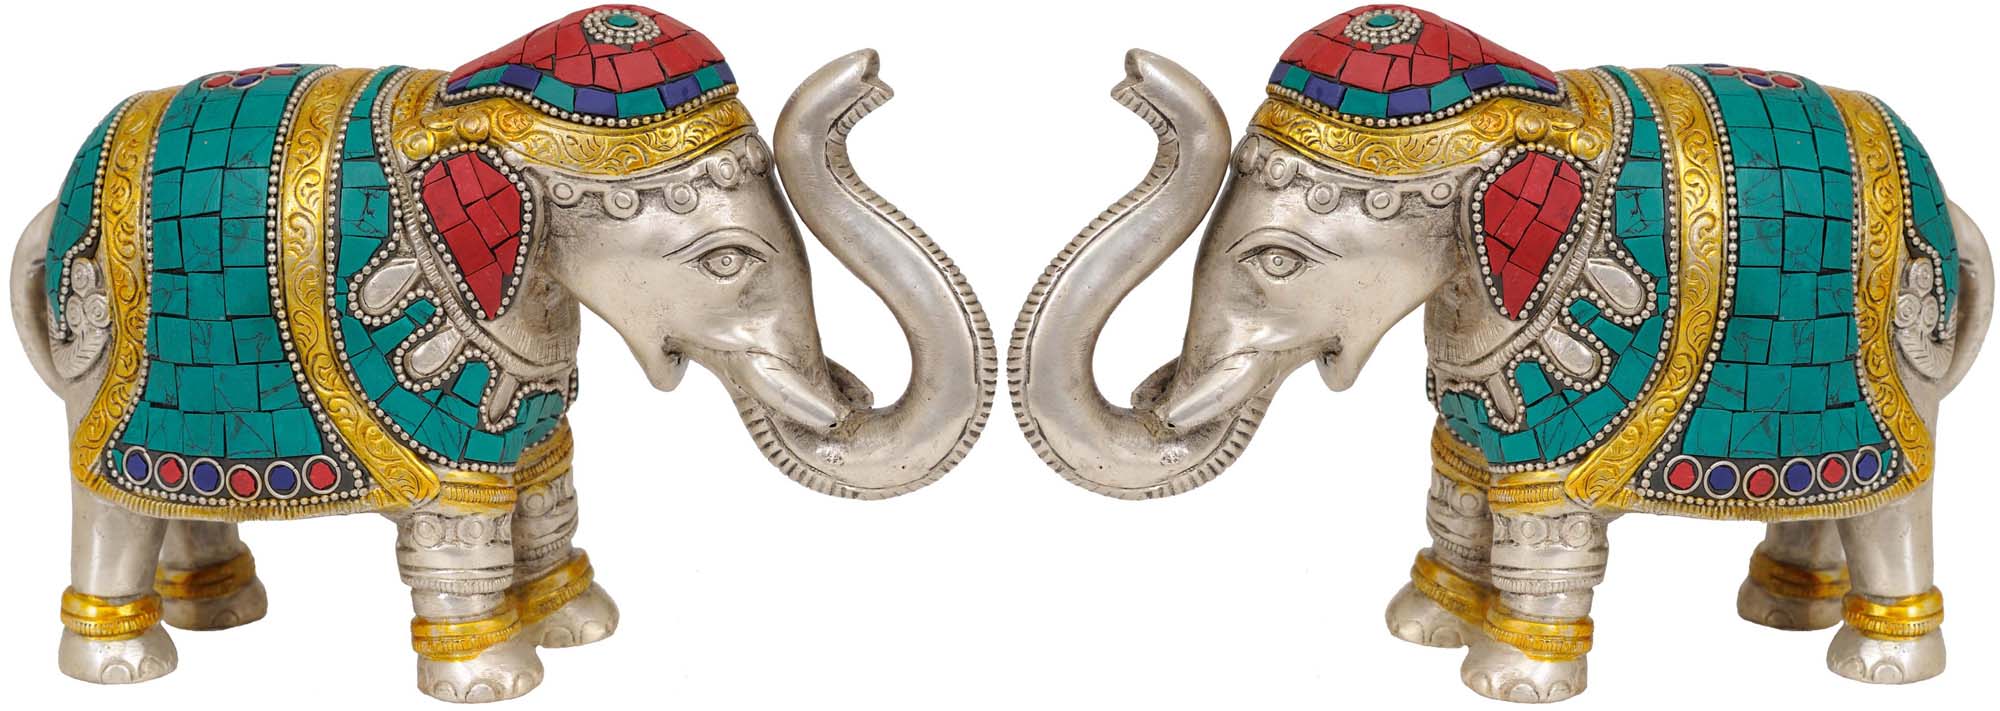 Elephant Pair with Upraised Trunks | Exotic India Art